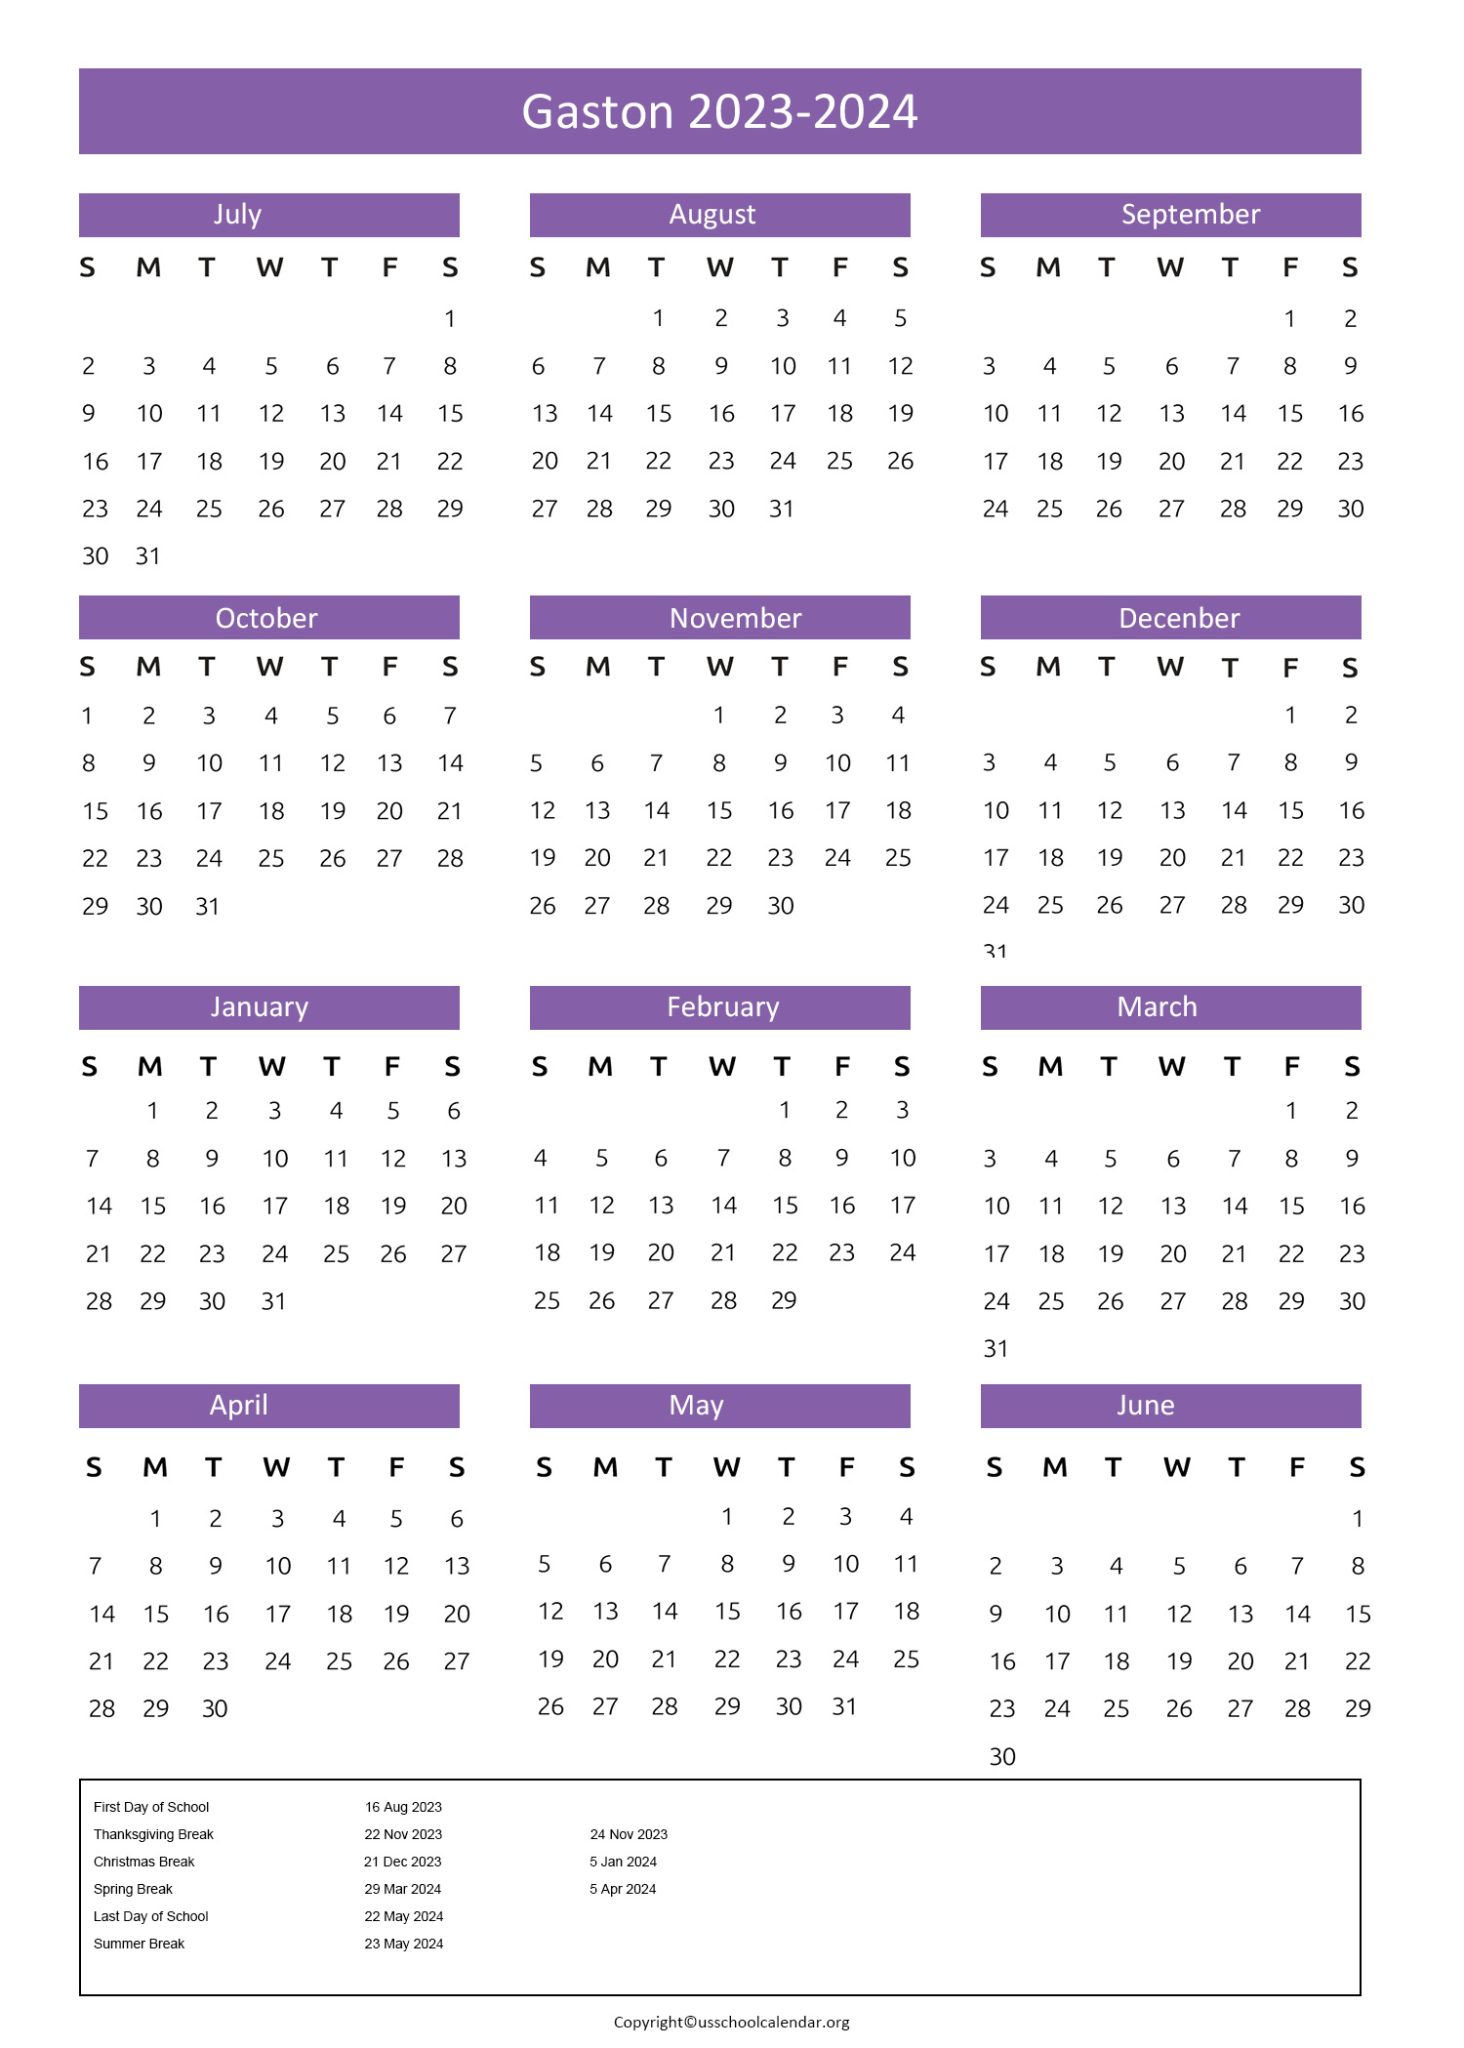 gaston-county-school-calendar-with-holidays-2023-2024